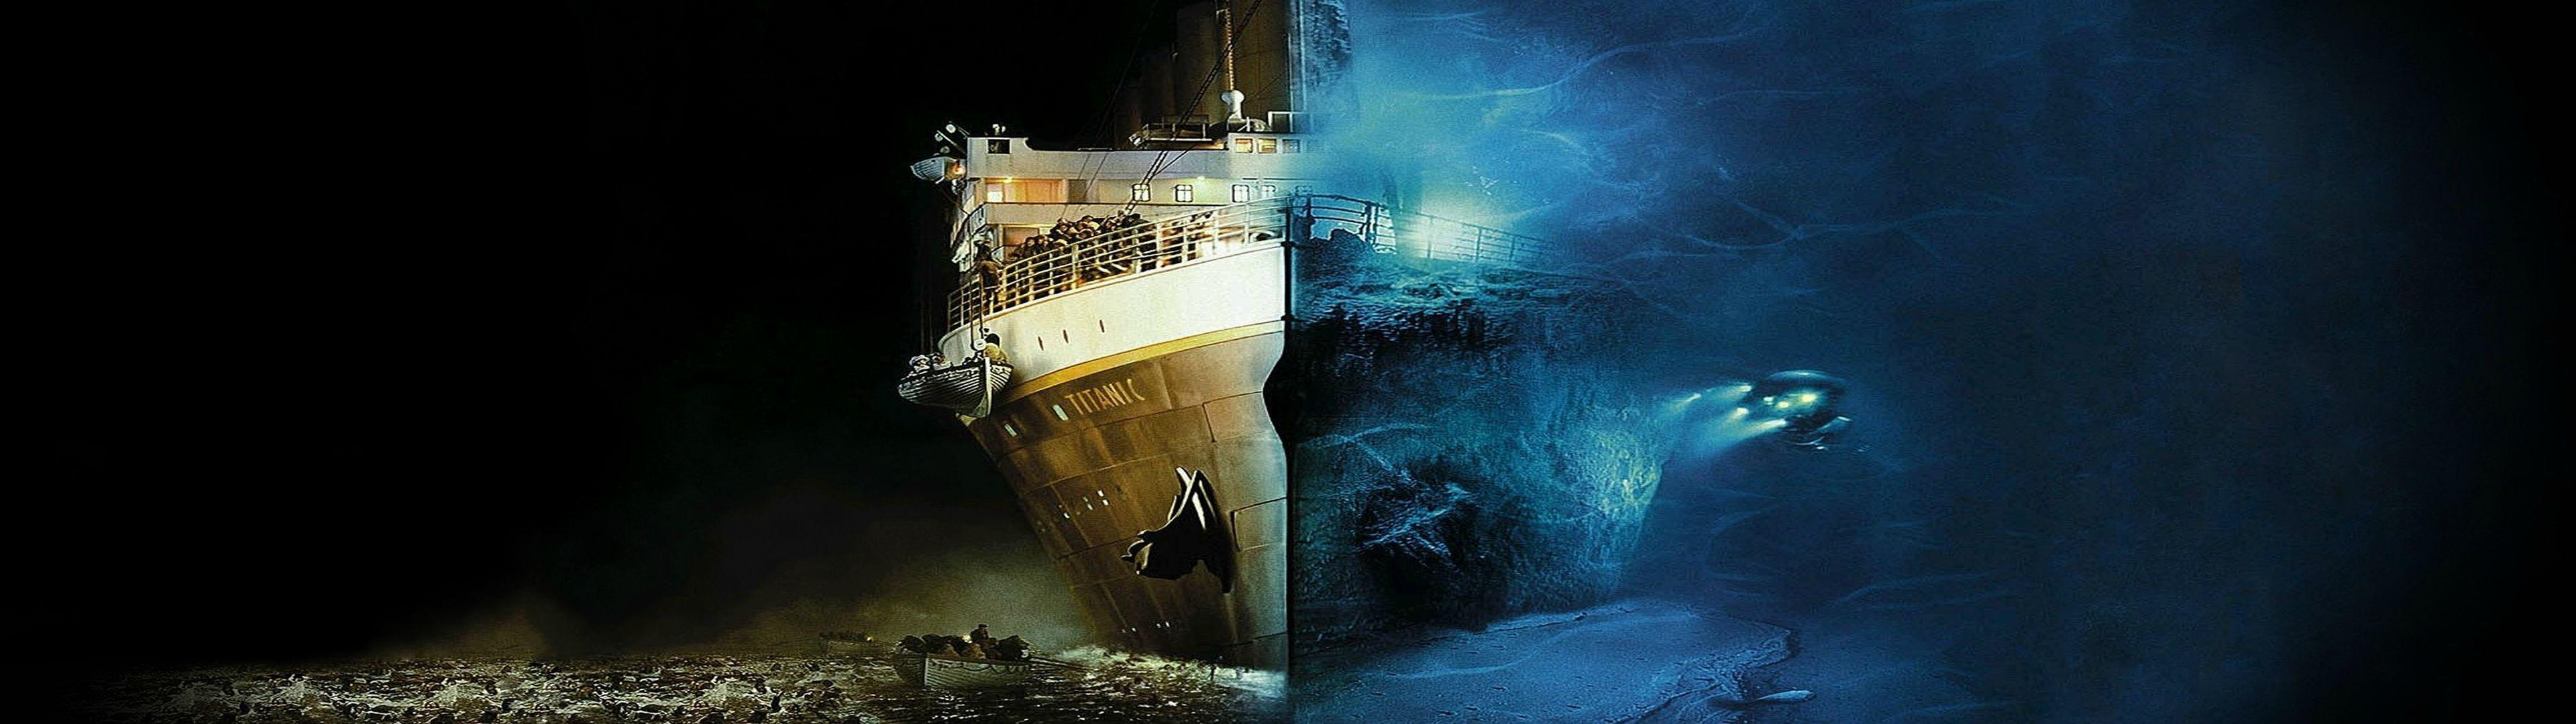 Wallpaper.wiki Titanic Dual Monitor Pics PIC WPD007324